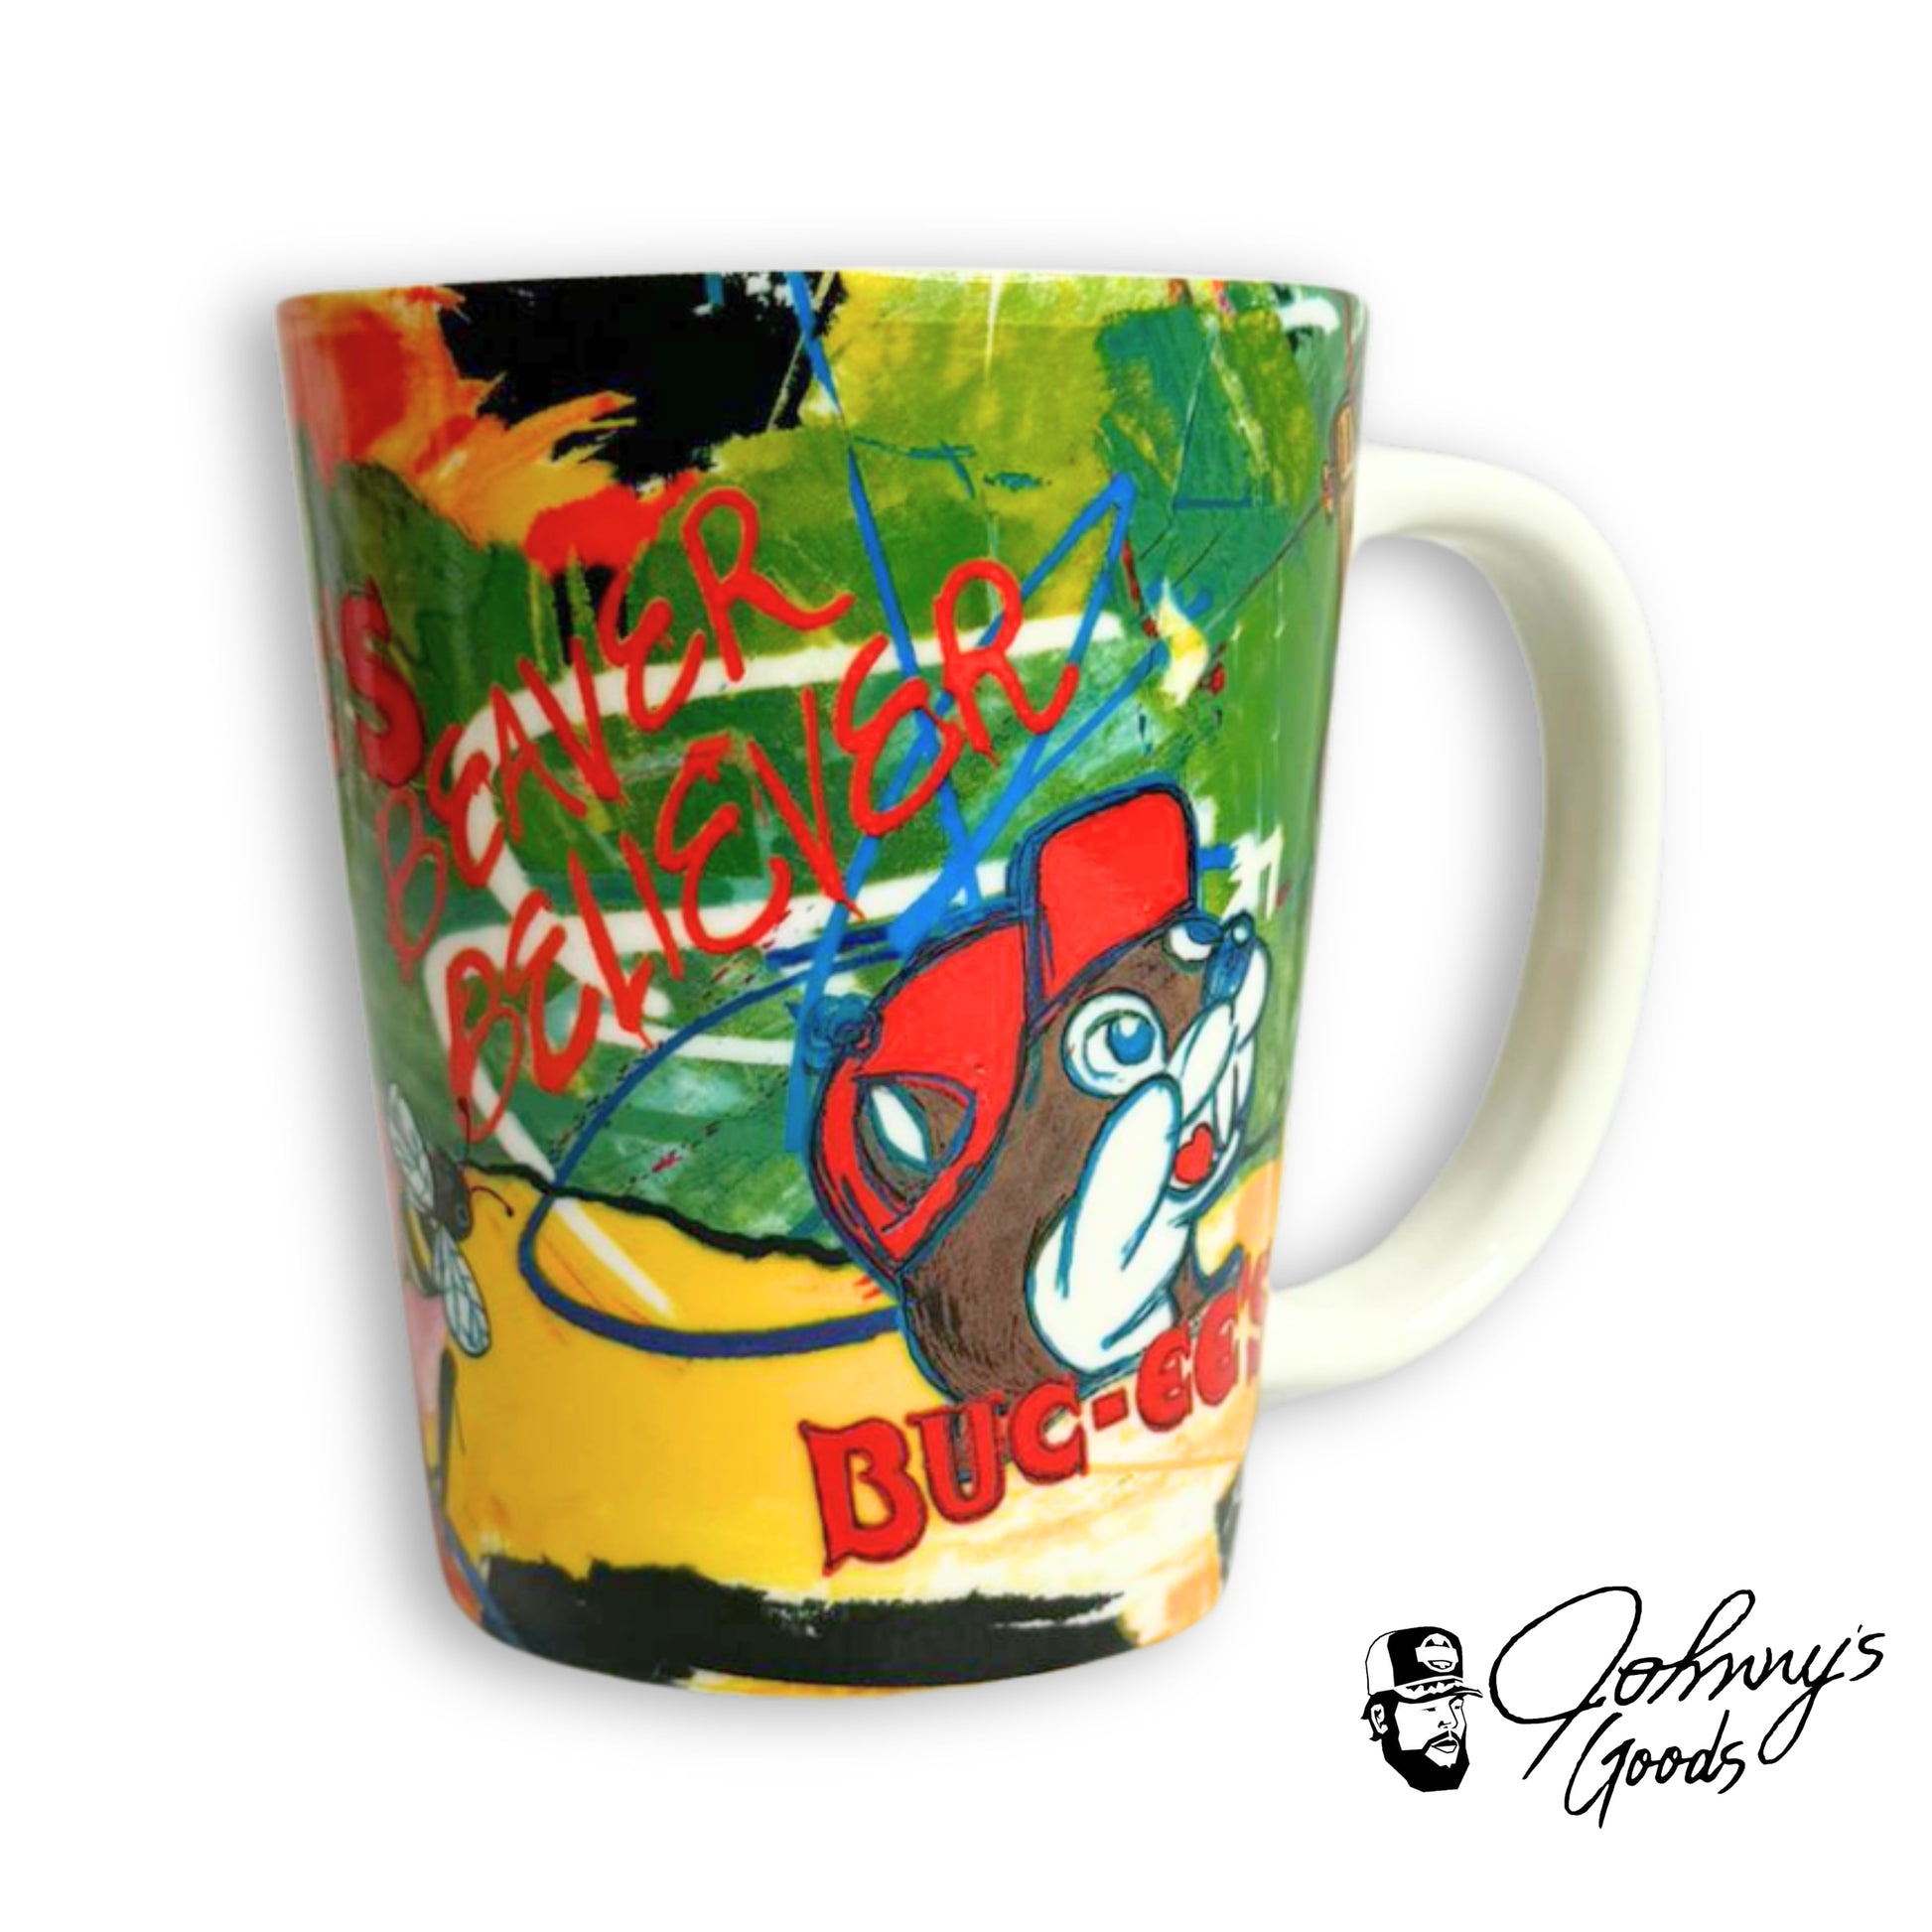 buc-ees ceramic mug cup